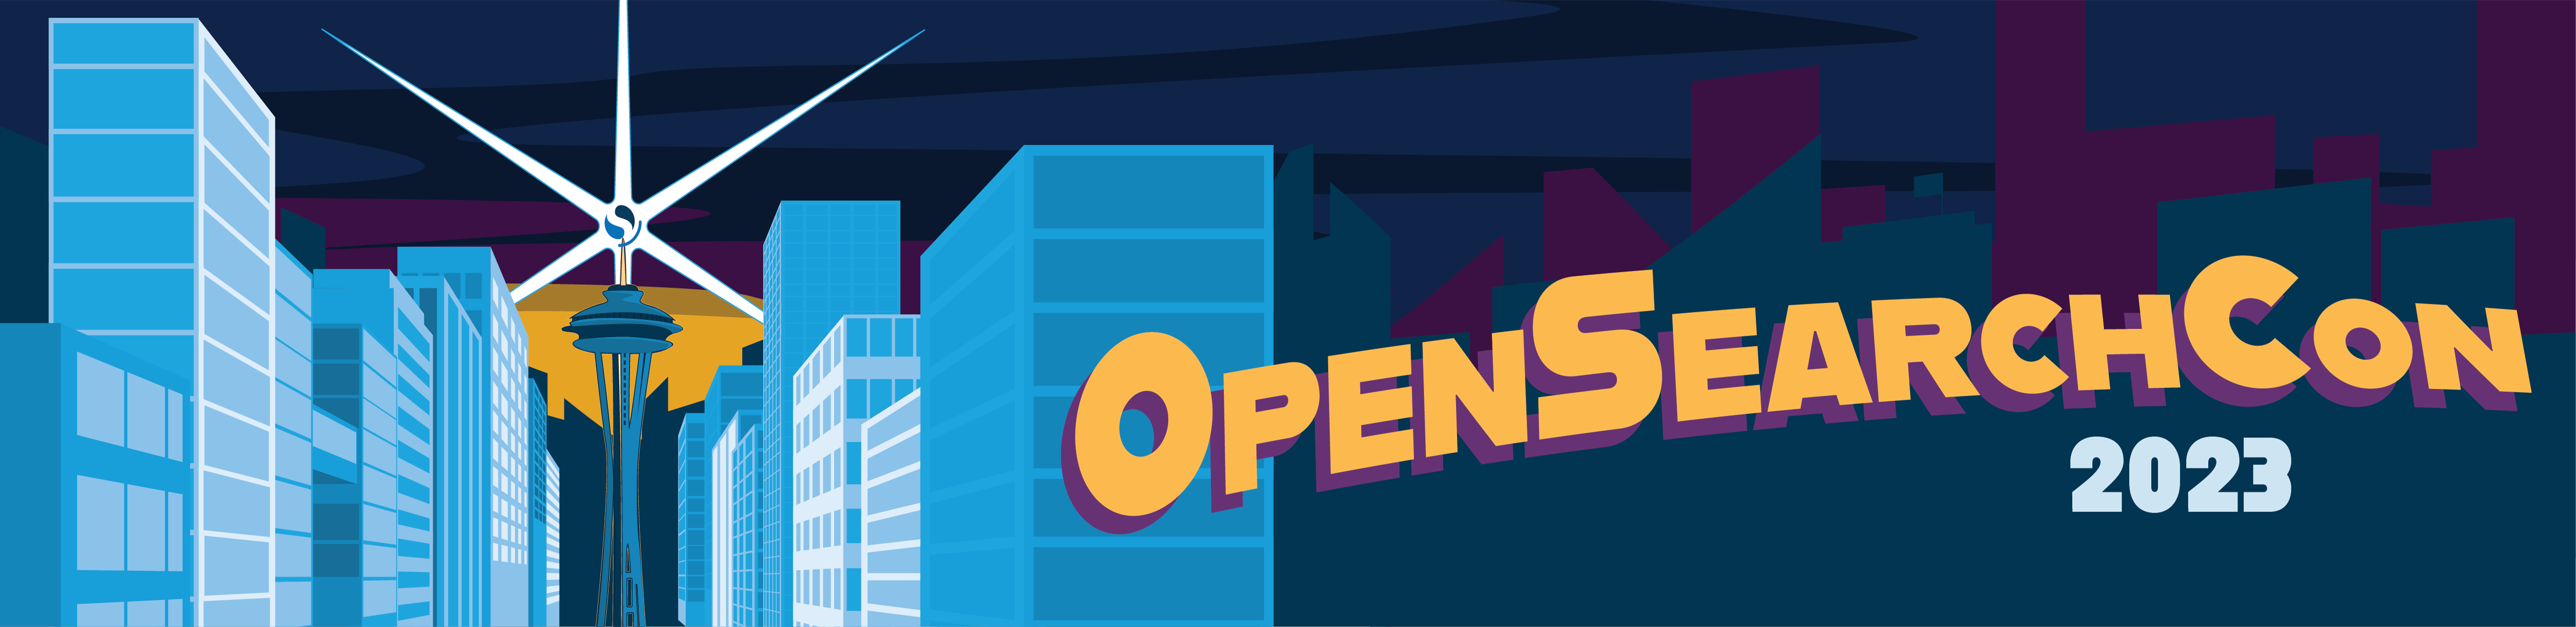 Register for OpenSearchCon 2023 hero banner image.